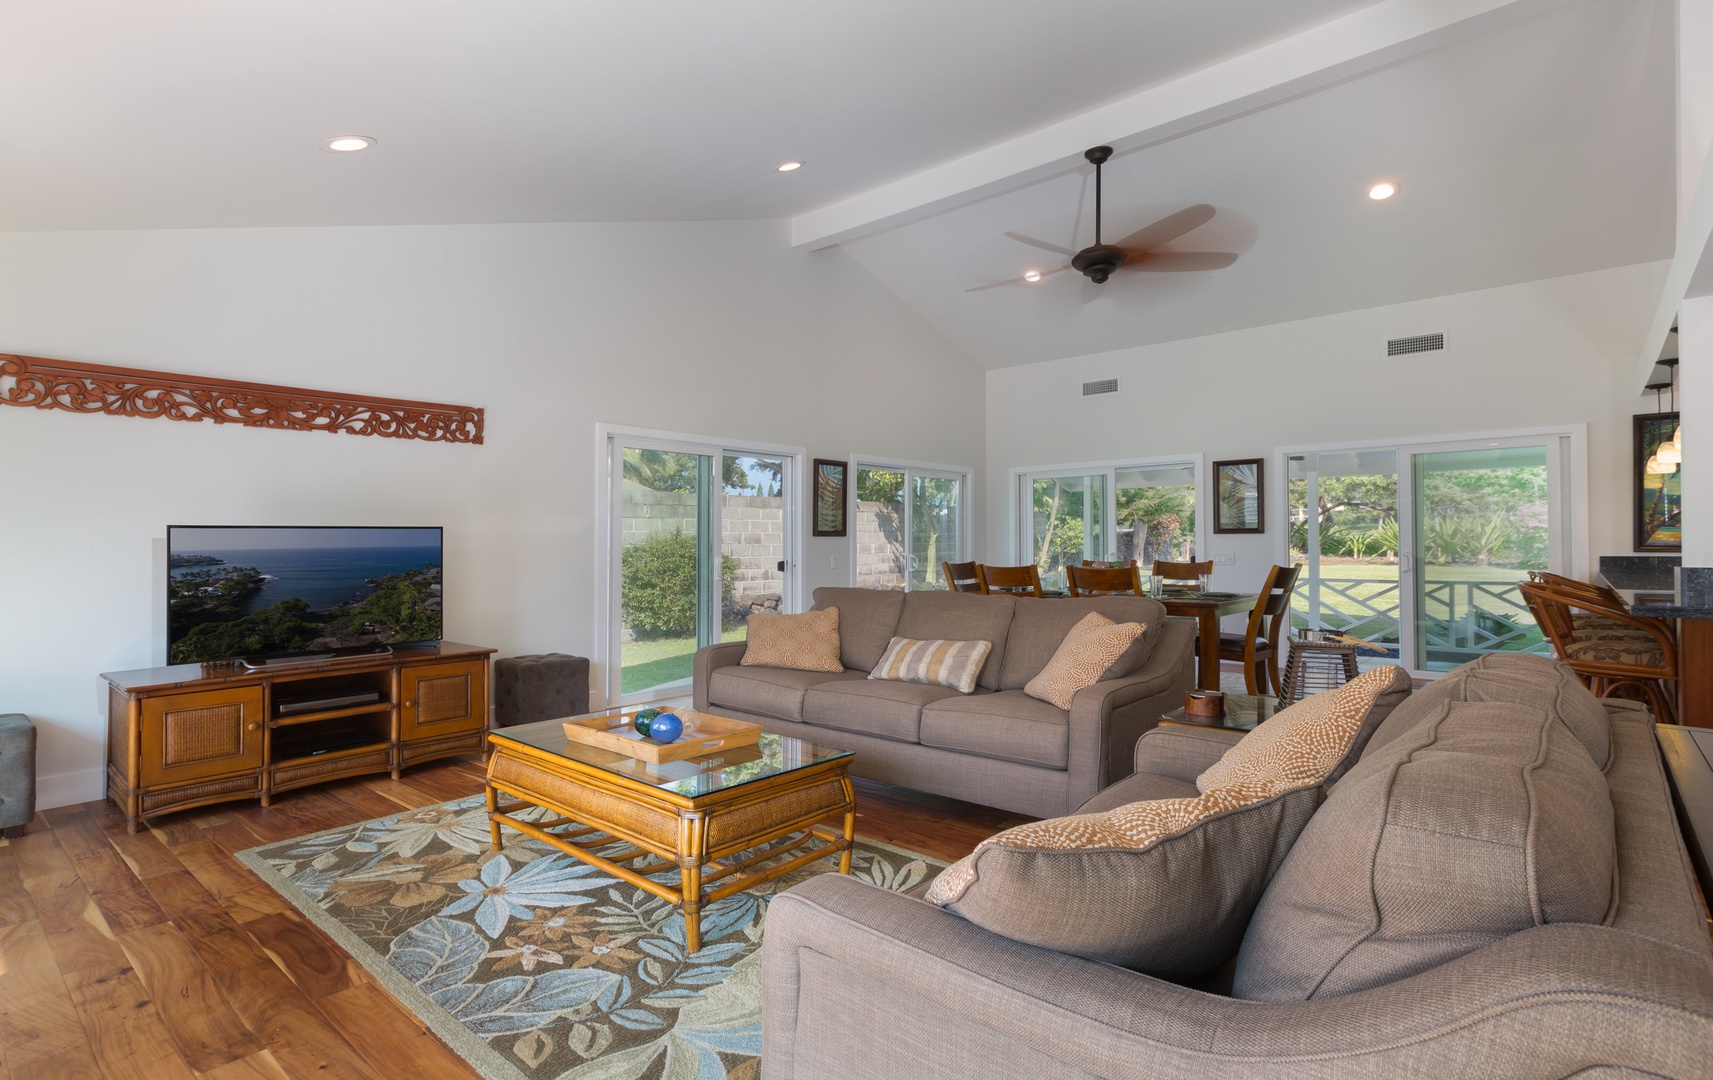 Kailua Kona Vacation Rentals, He'eia Bay Beach Bungalow (Big Island) - Comfortable living room.